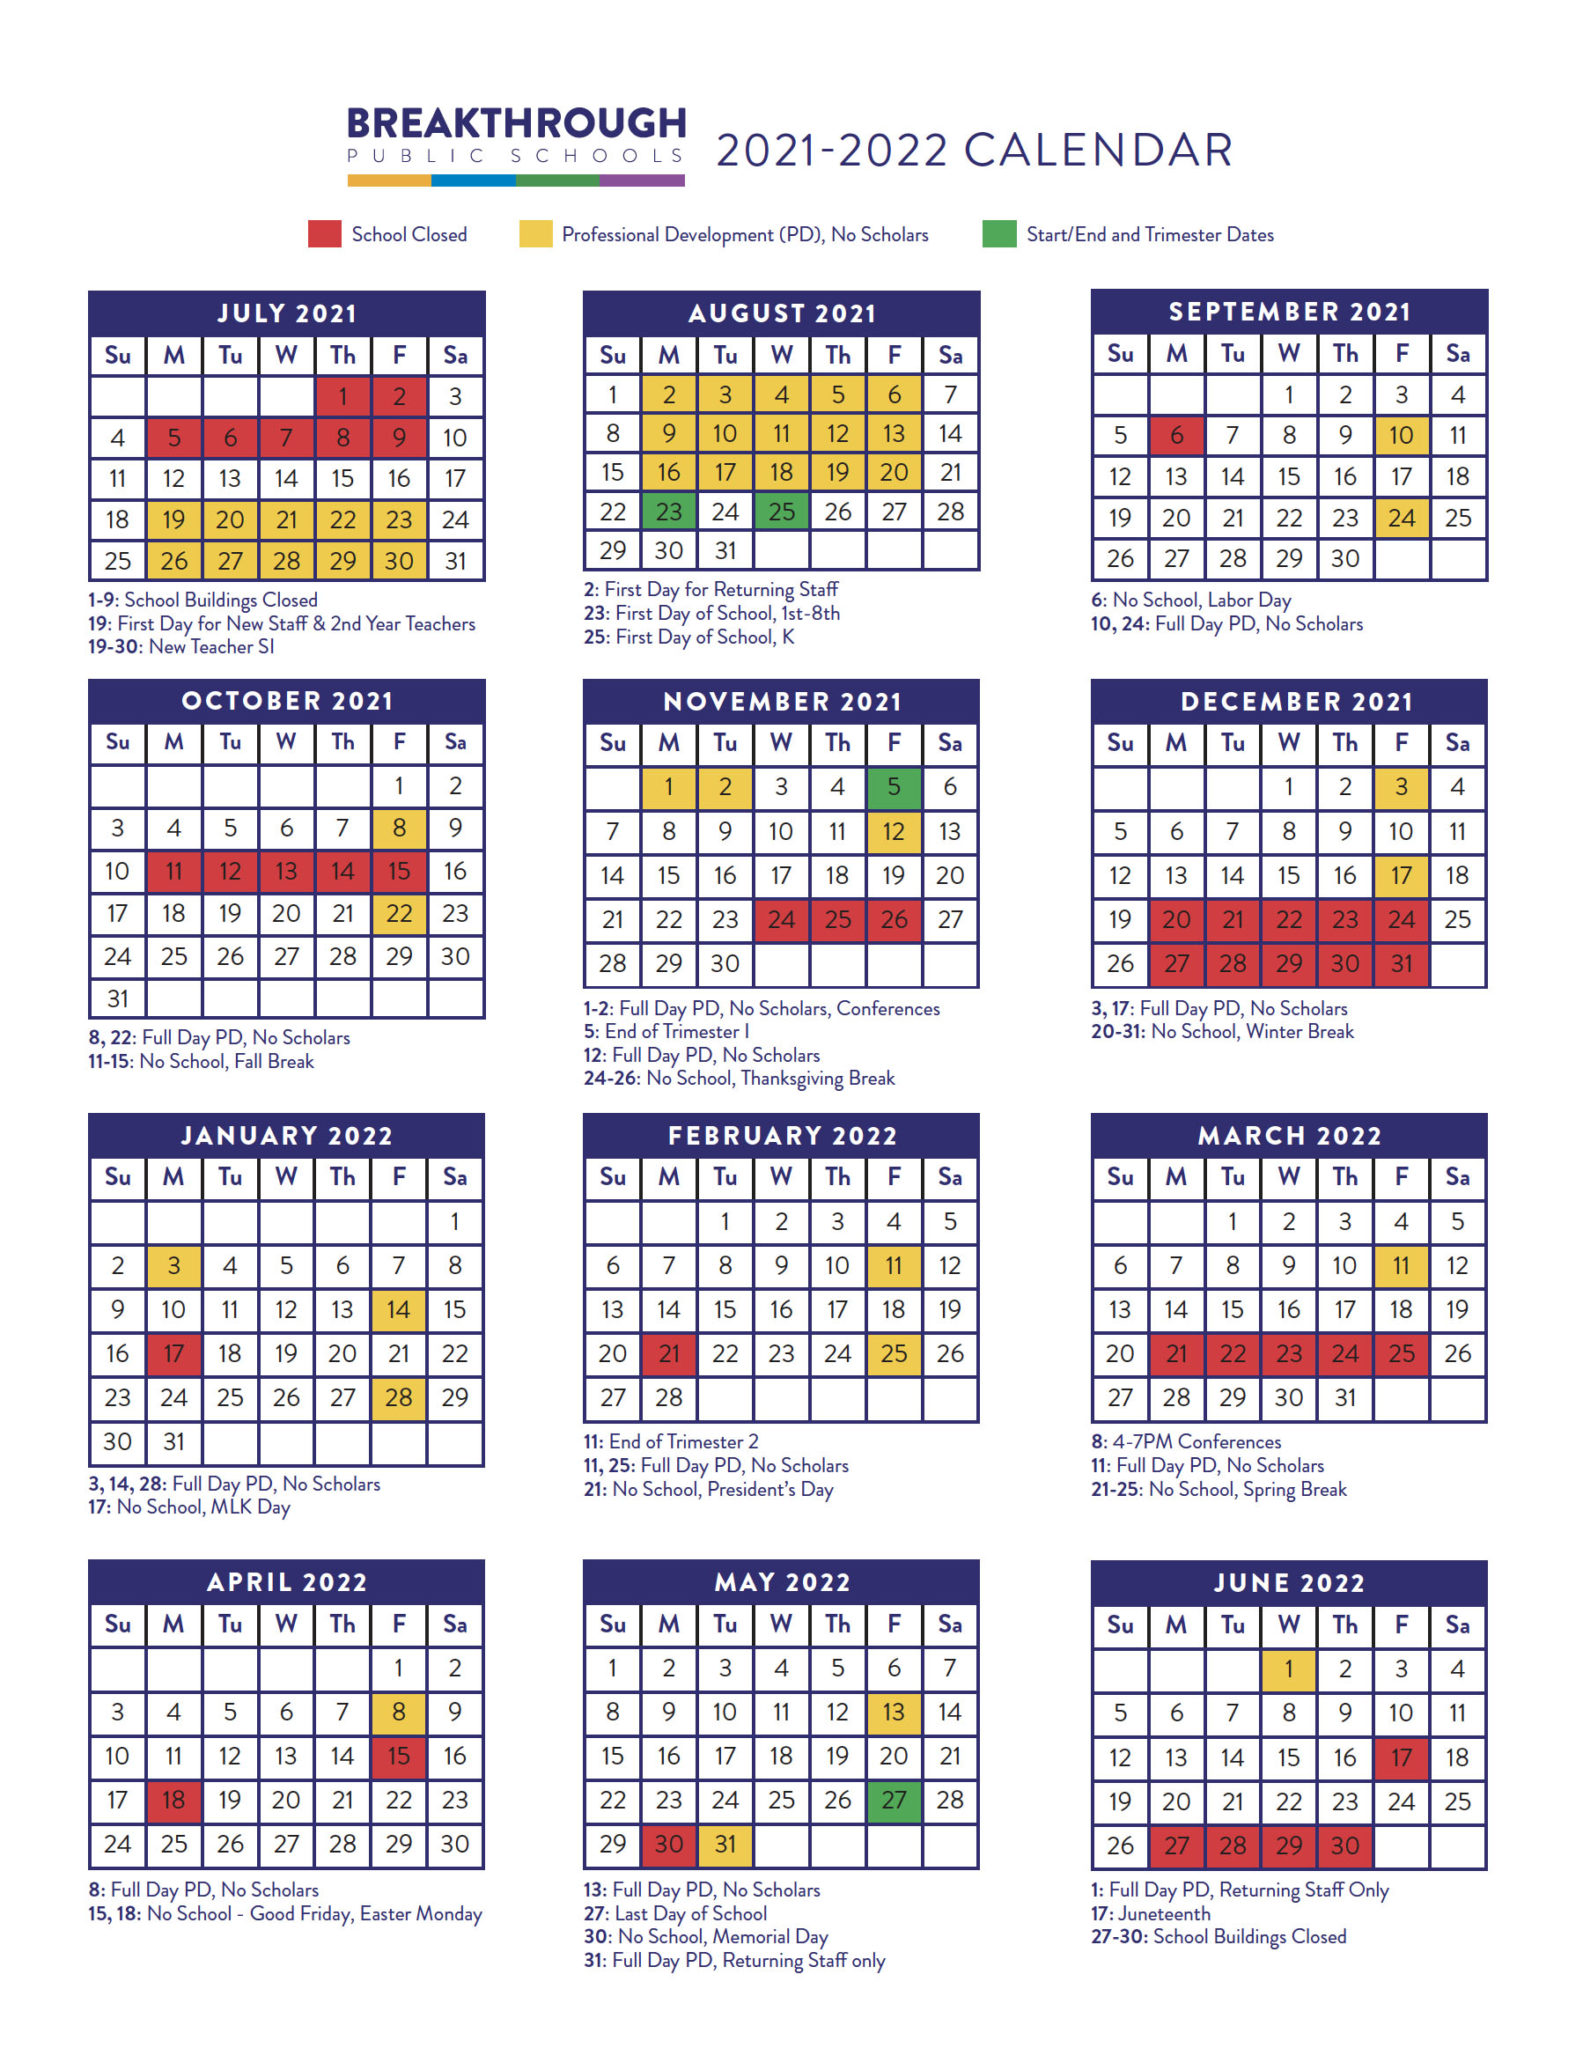 BPS Calendar 202122 Breakthrough Public Schools (BPS)